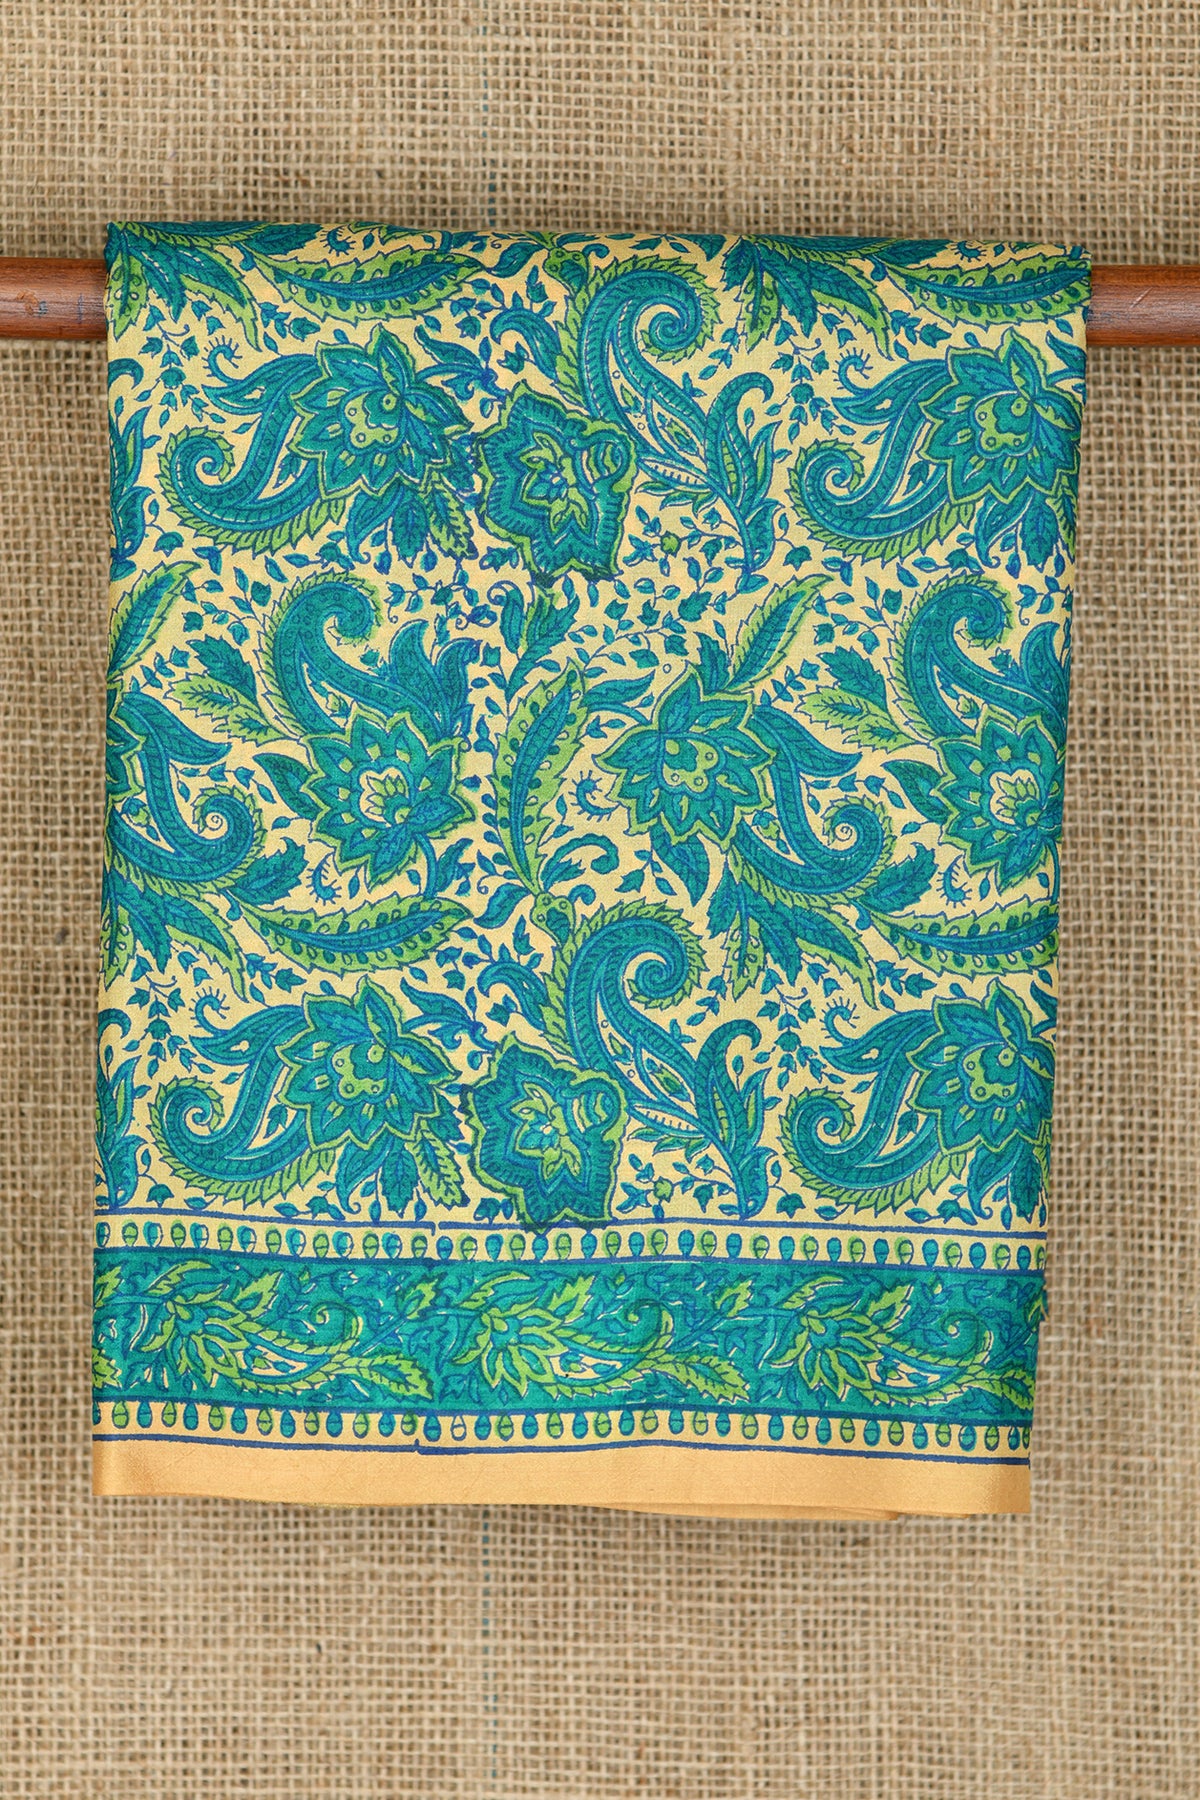 Paisley Floral Design Cream And Teal Green Printed Silk Saree